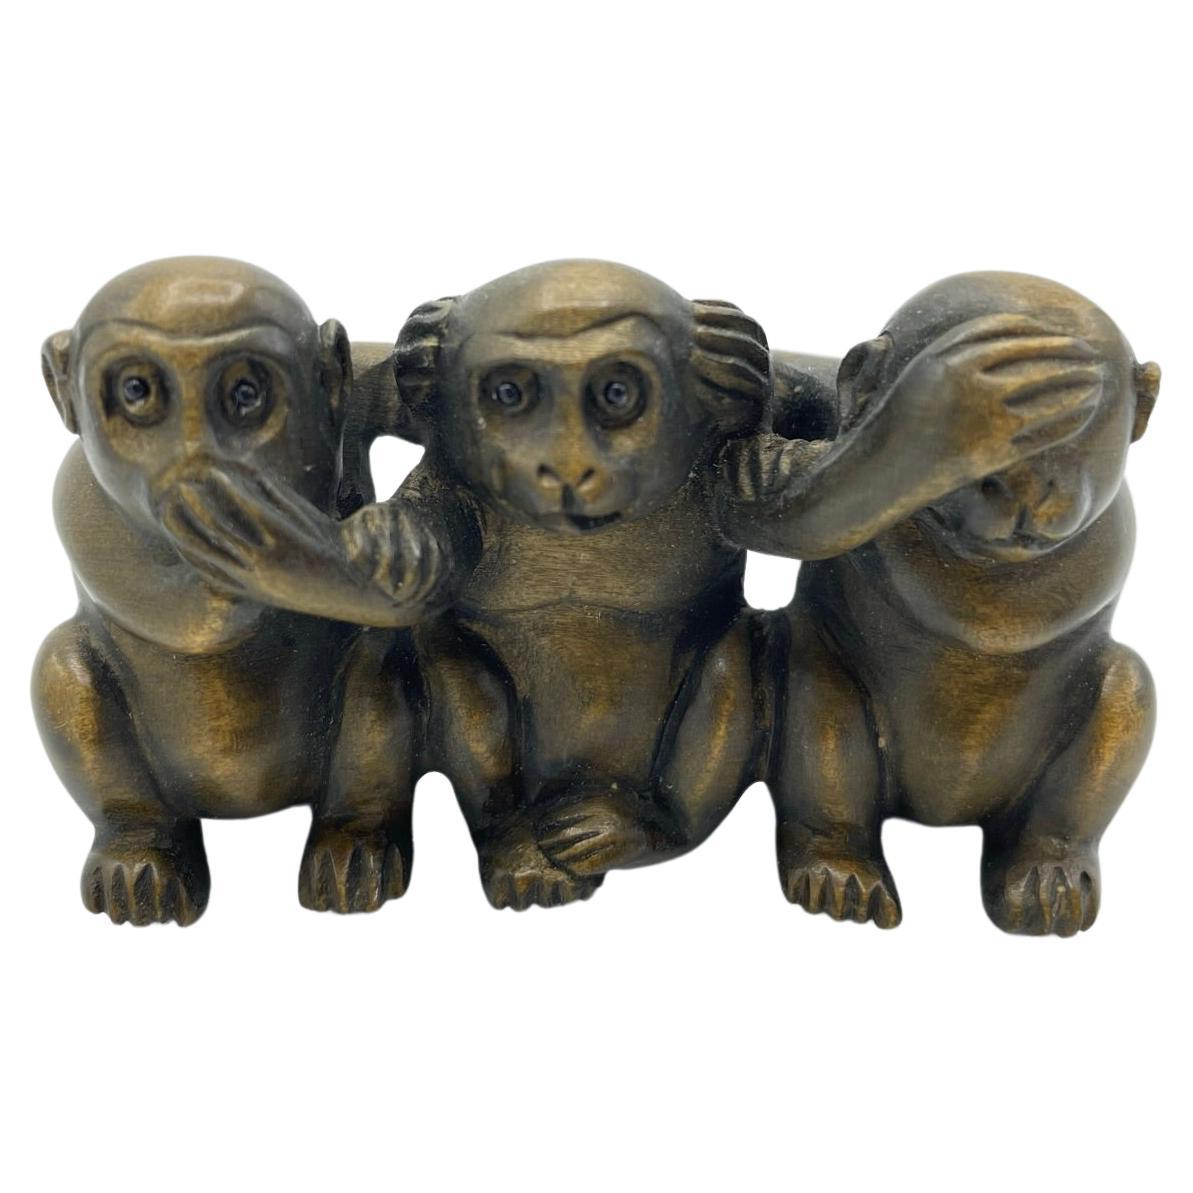 Antique Japanese Wooden Netsuke 'Three Monkeys' Edo Era 1800s